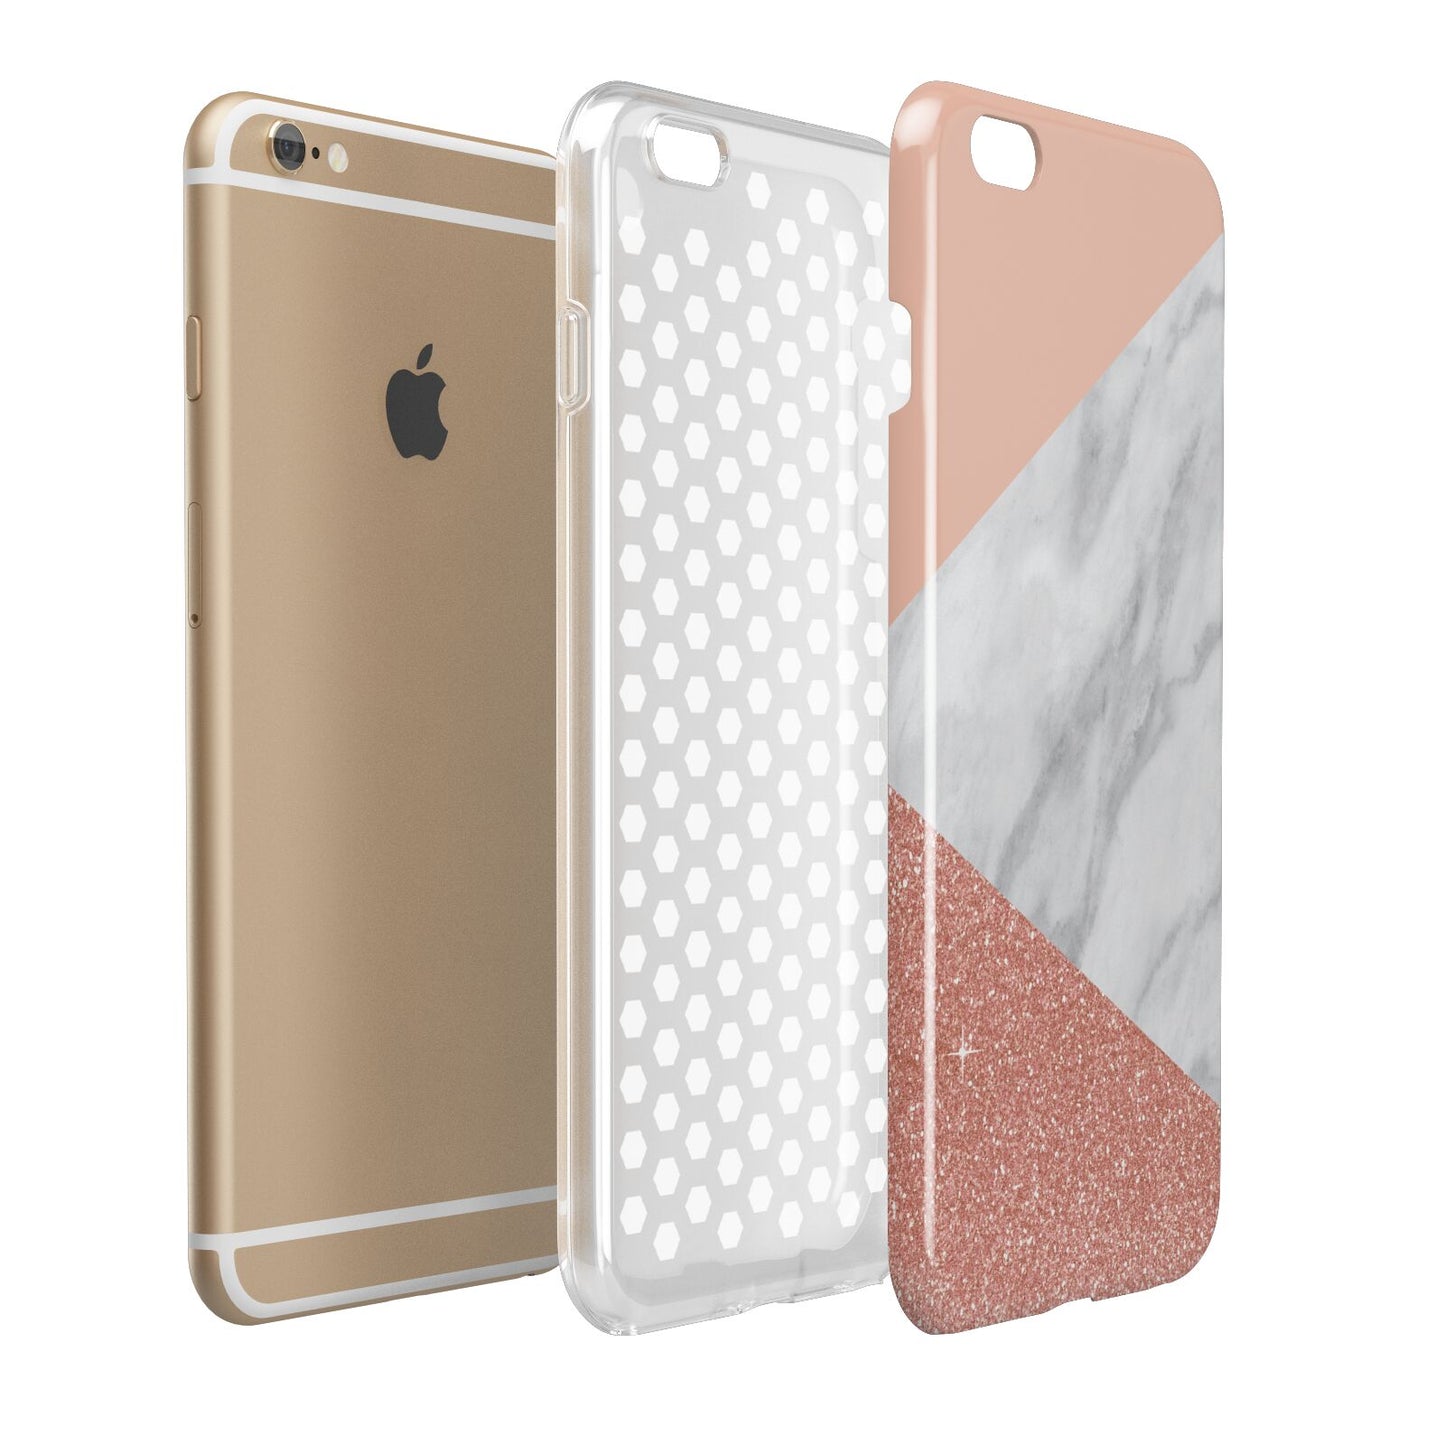 Marble White Rose Gold Apple iPhone 6 Plus 3D Tough Case Expand Detail Image